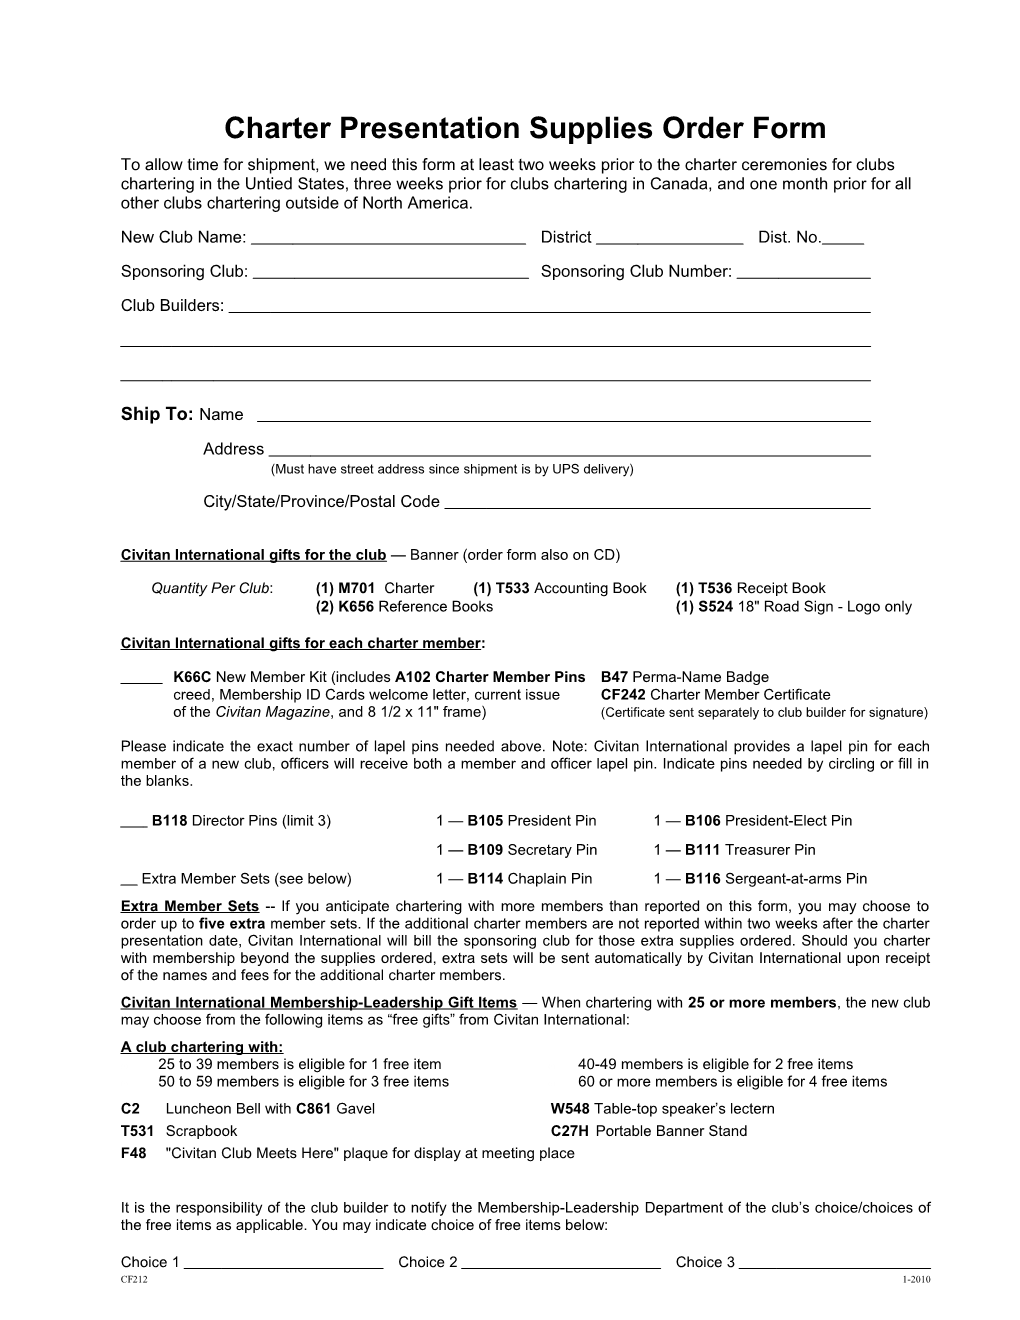 Charter Presentation Supplies Order Form